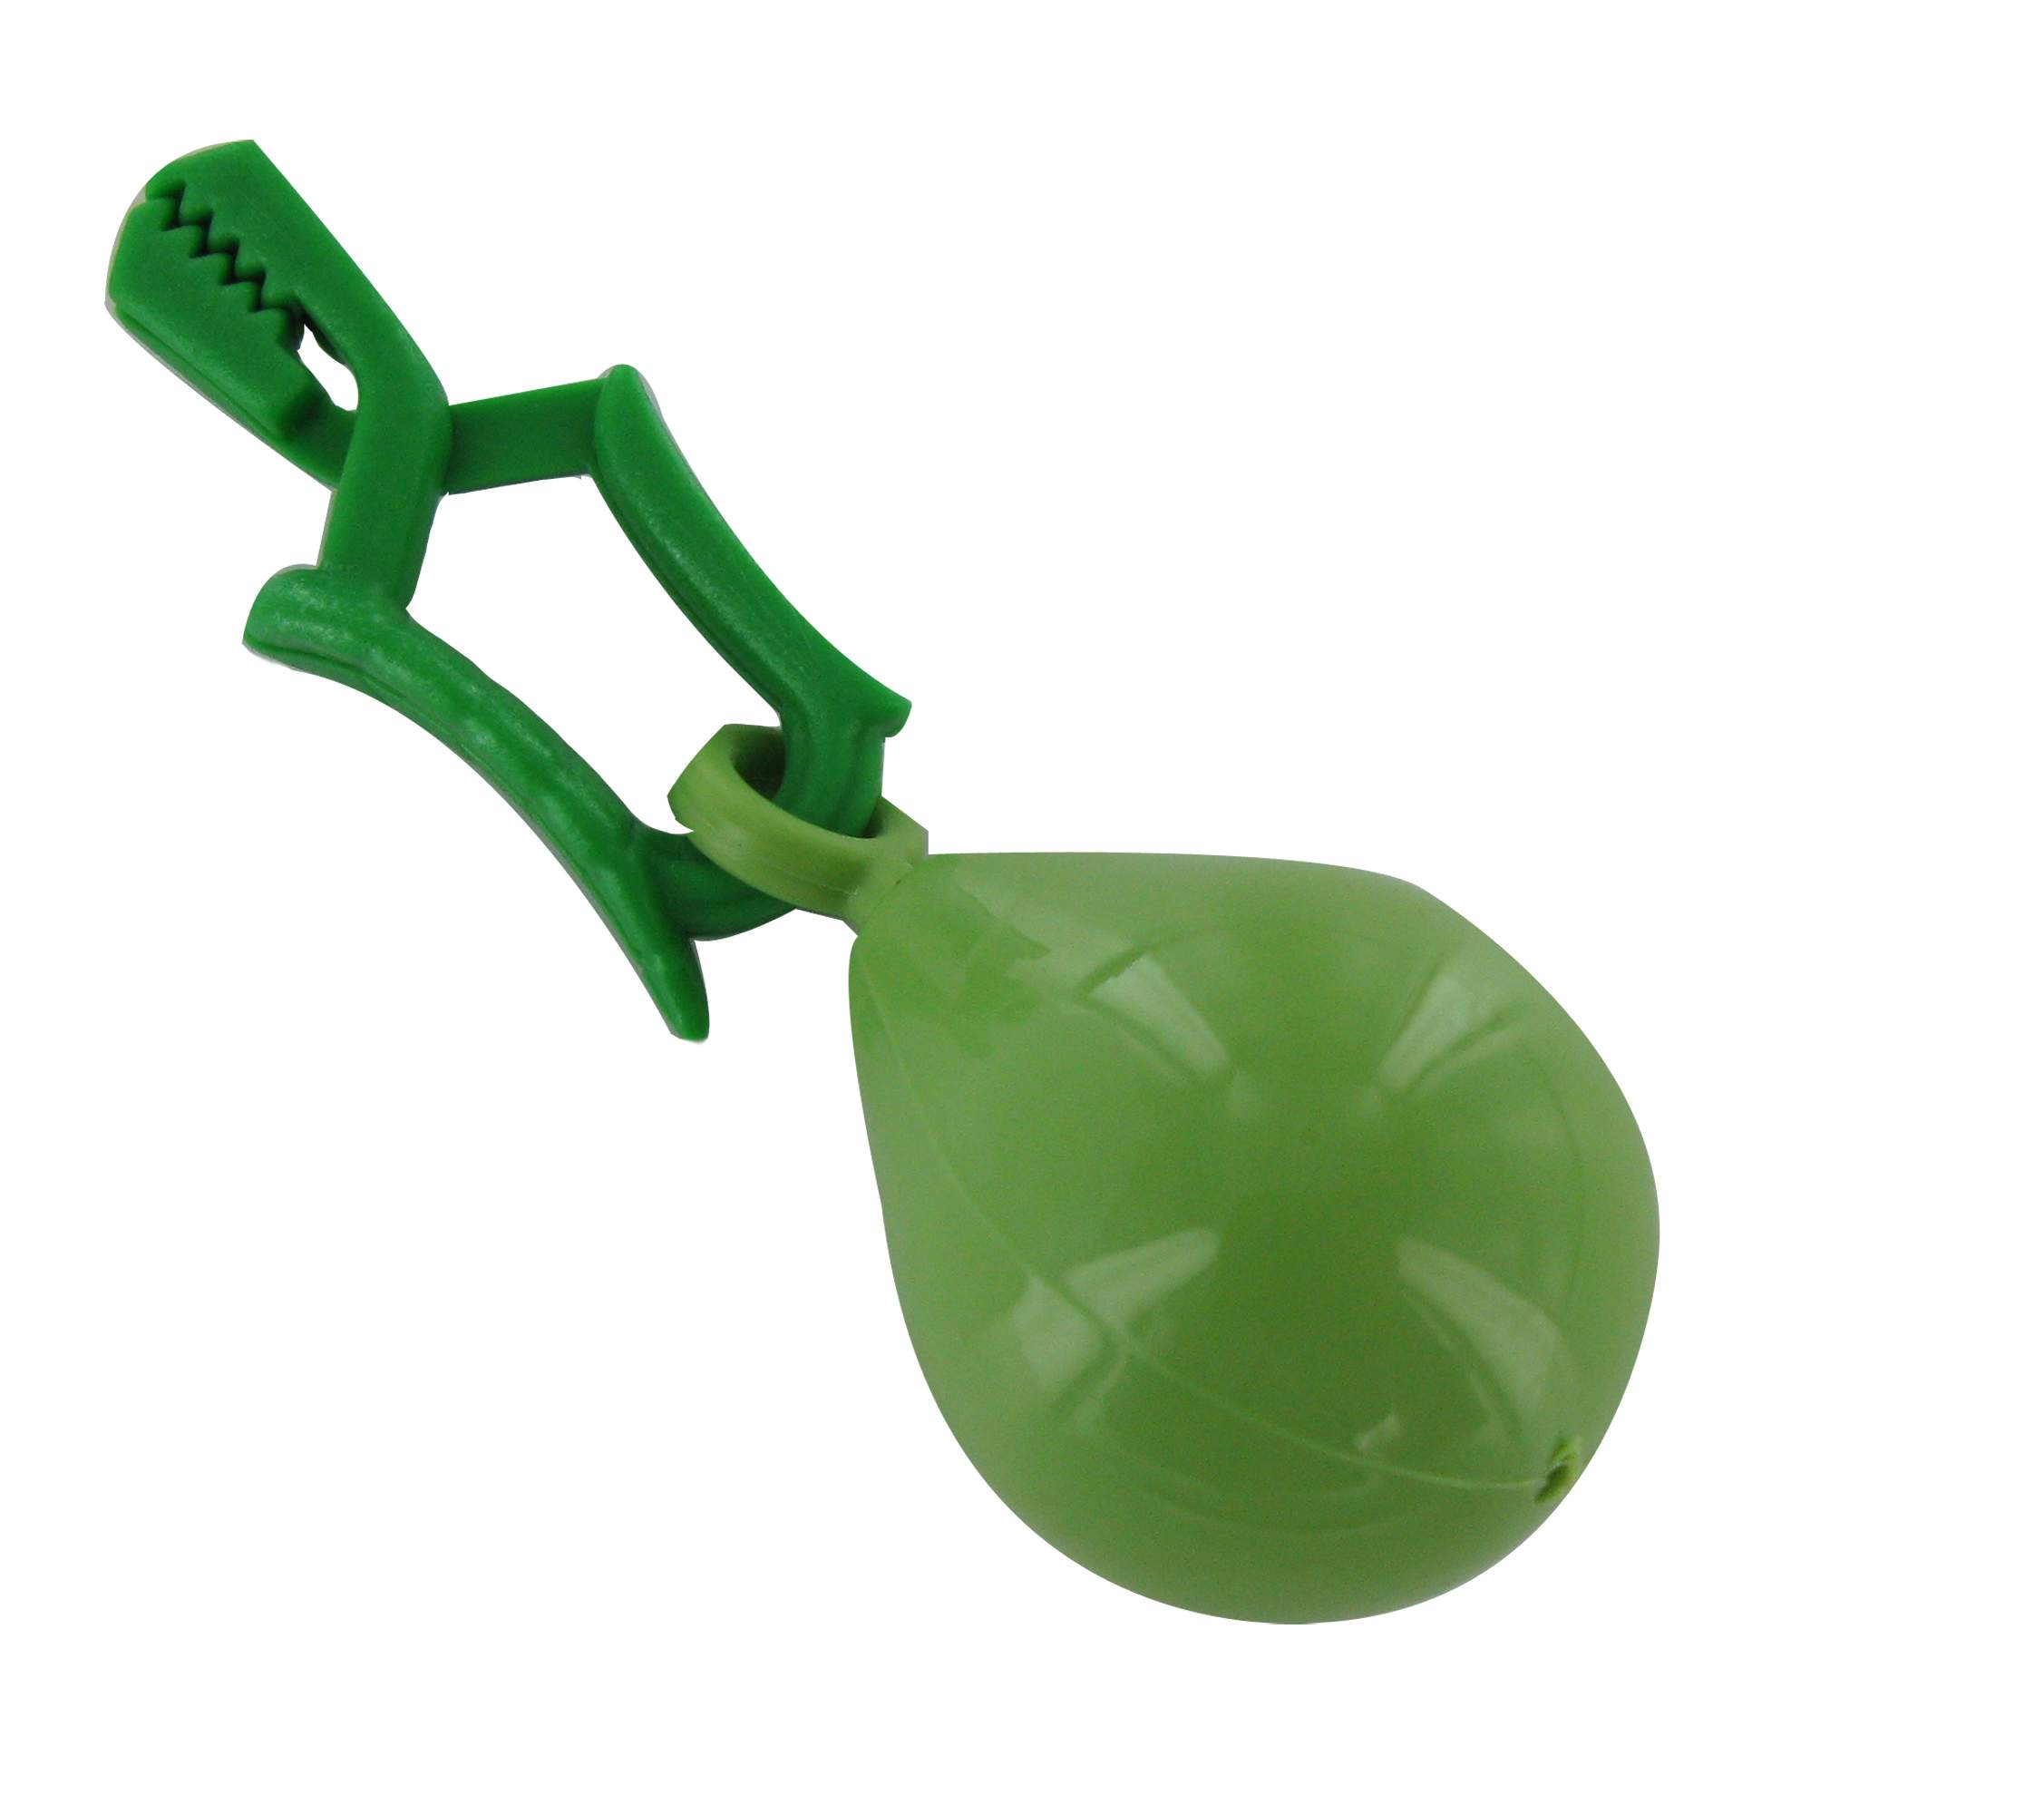 Pear tablecloth weight, H.75.5mm, D.26mm, green plastic, 2 pcs.